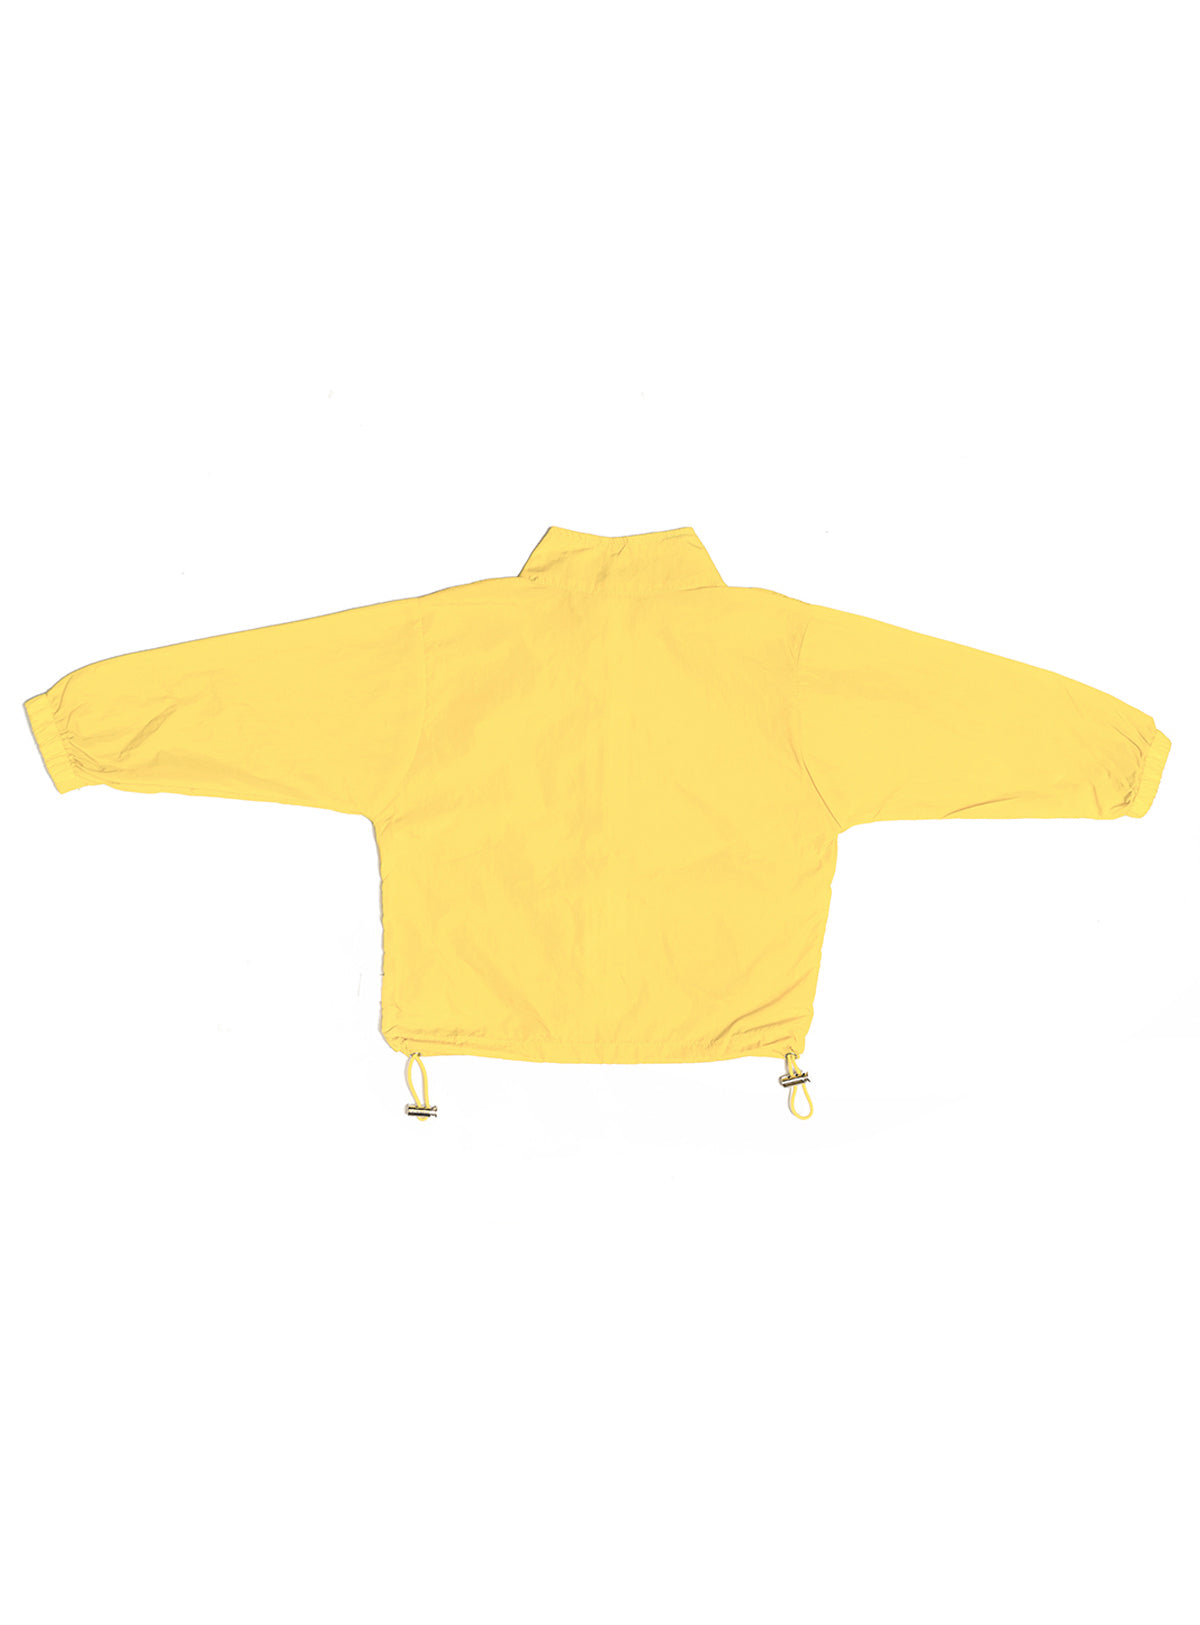 canary yellow waterproof lightweight jacket